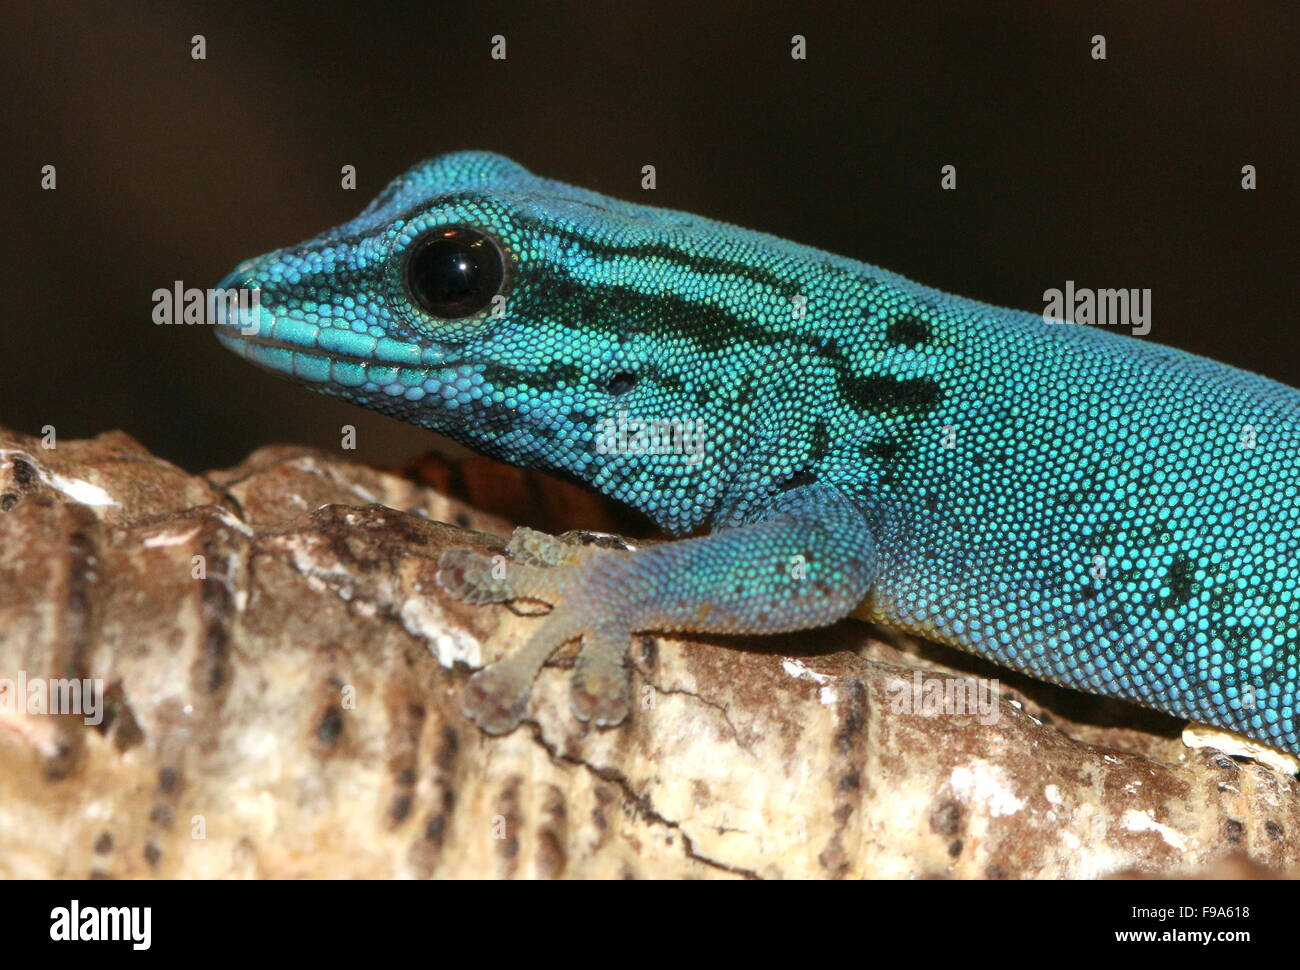 Geco enano turquesa de Tanzanía o William's dwarf gecko (Lygodactylus williamsi) Foto de stock